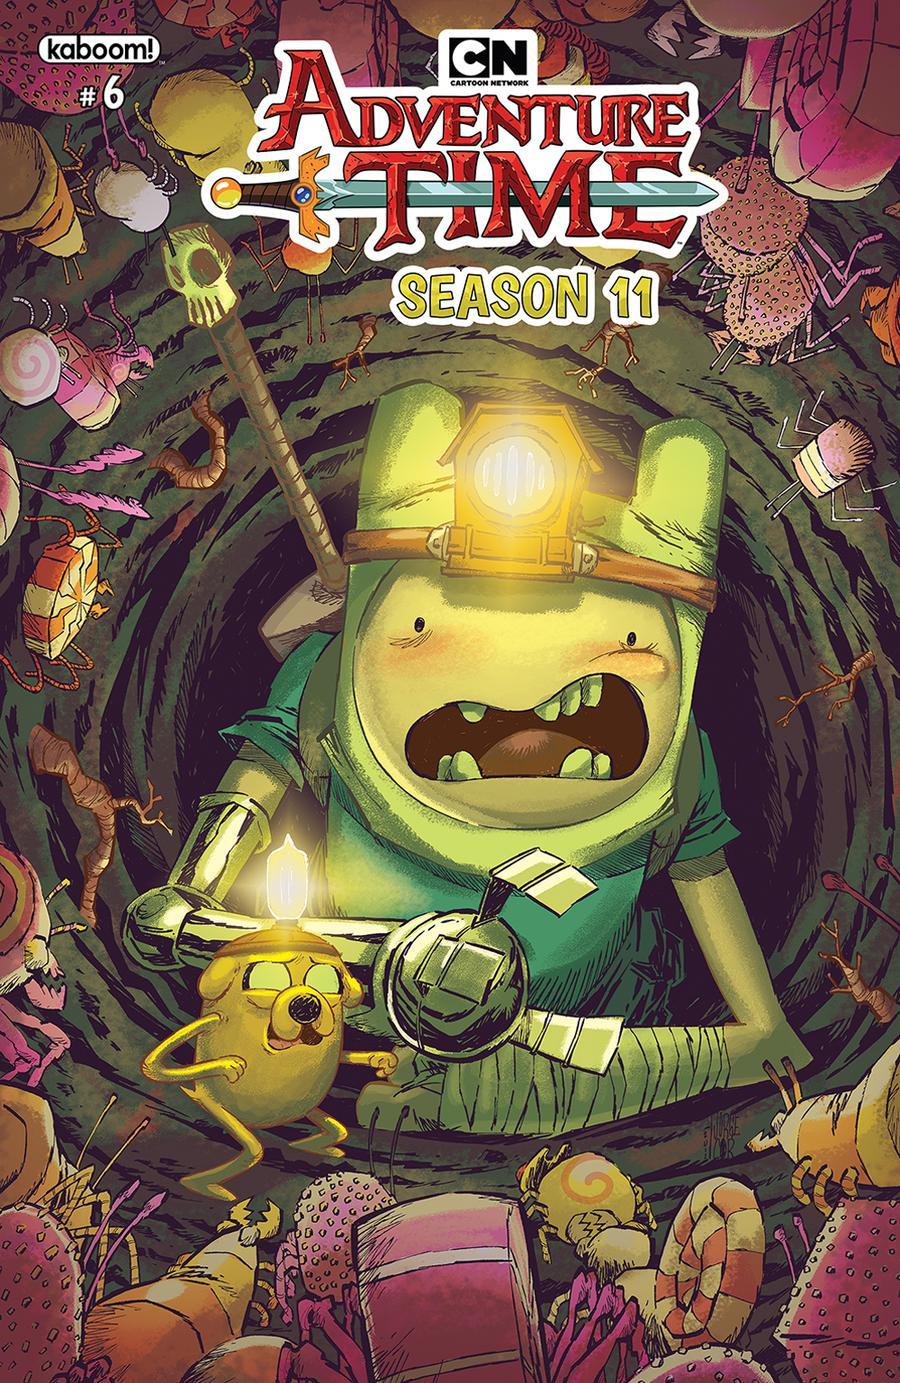 Adventure Time Season 11 Vol. 1 #6